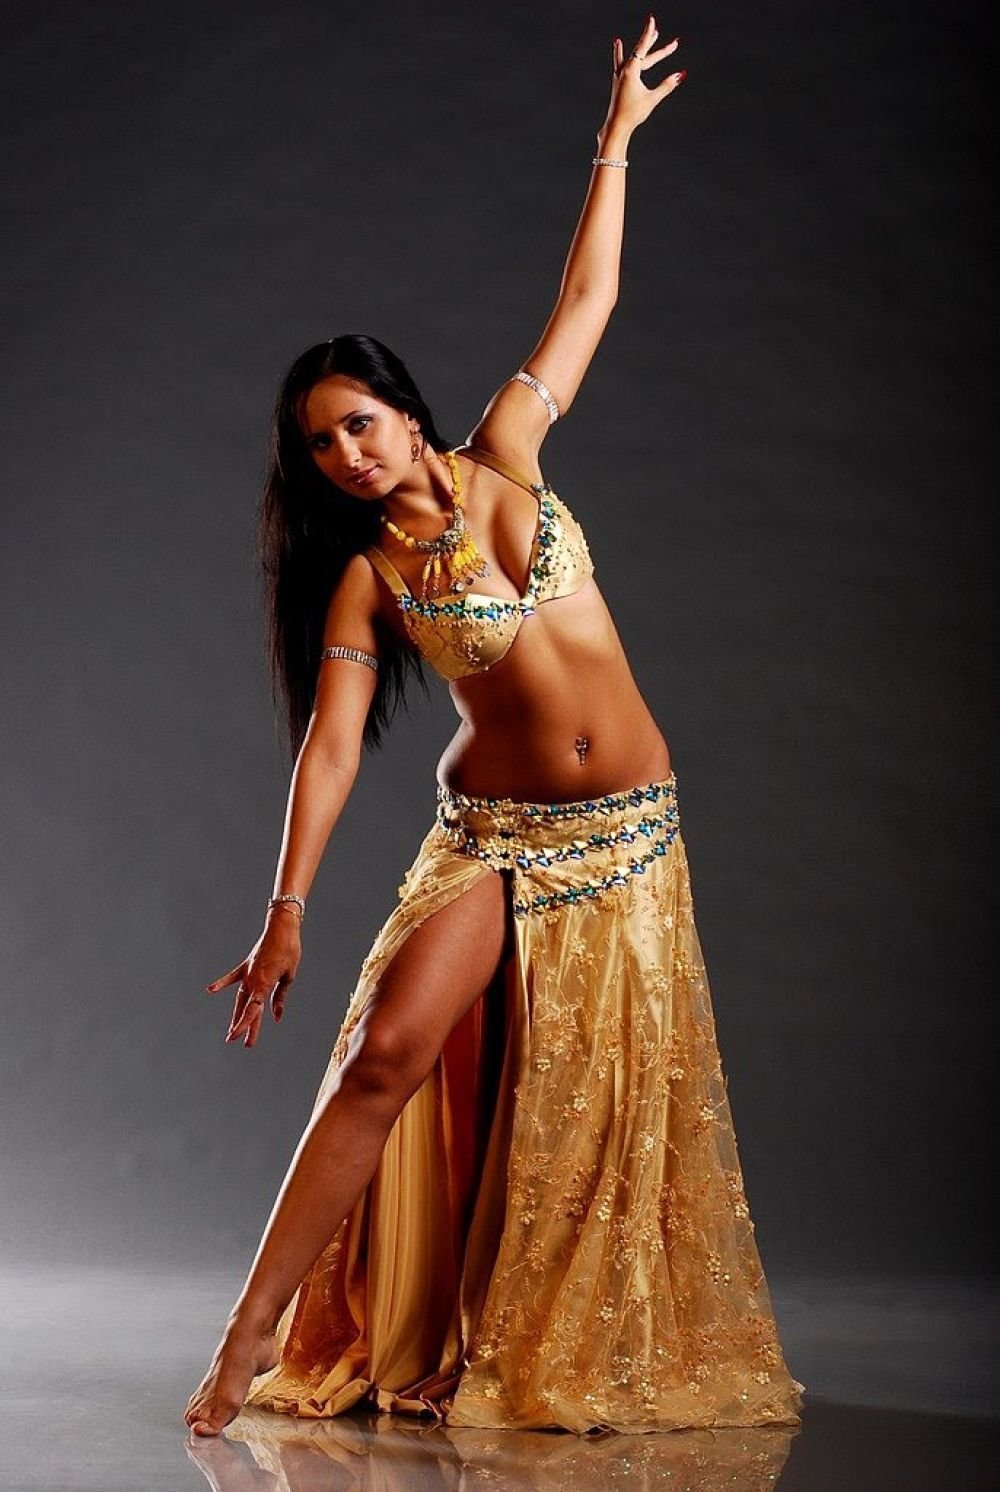 Арабские музыка живота. Белли дэнс танец живота. Танцовщица беллиданс. Индийская танцовщица Белли дэнс.